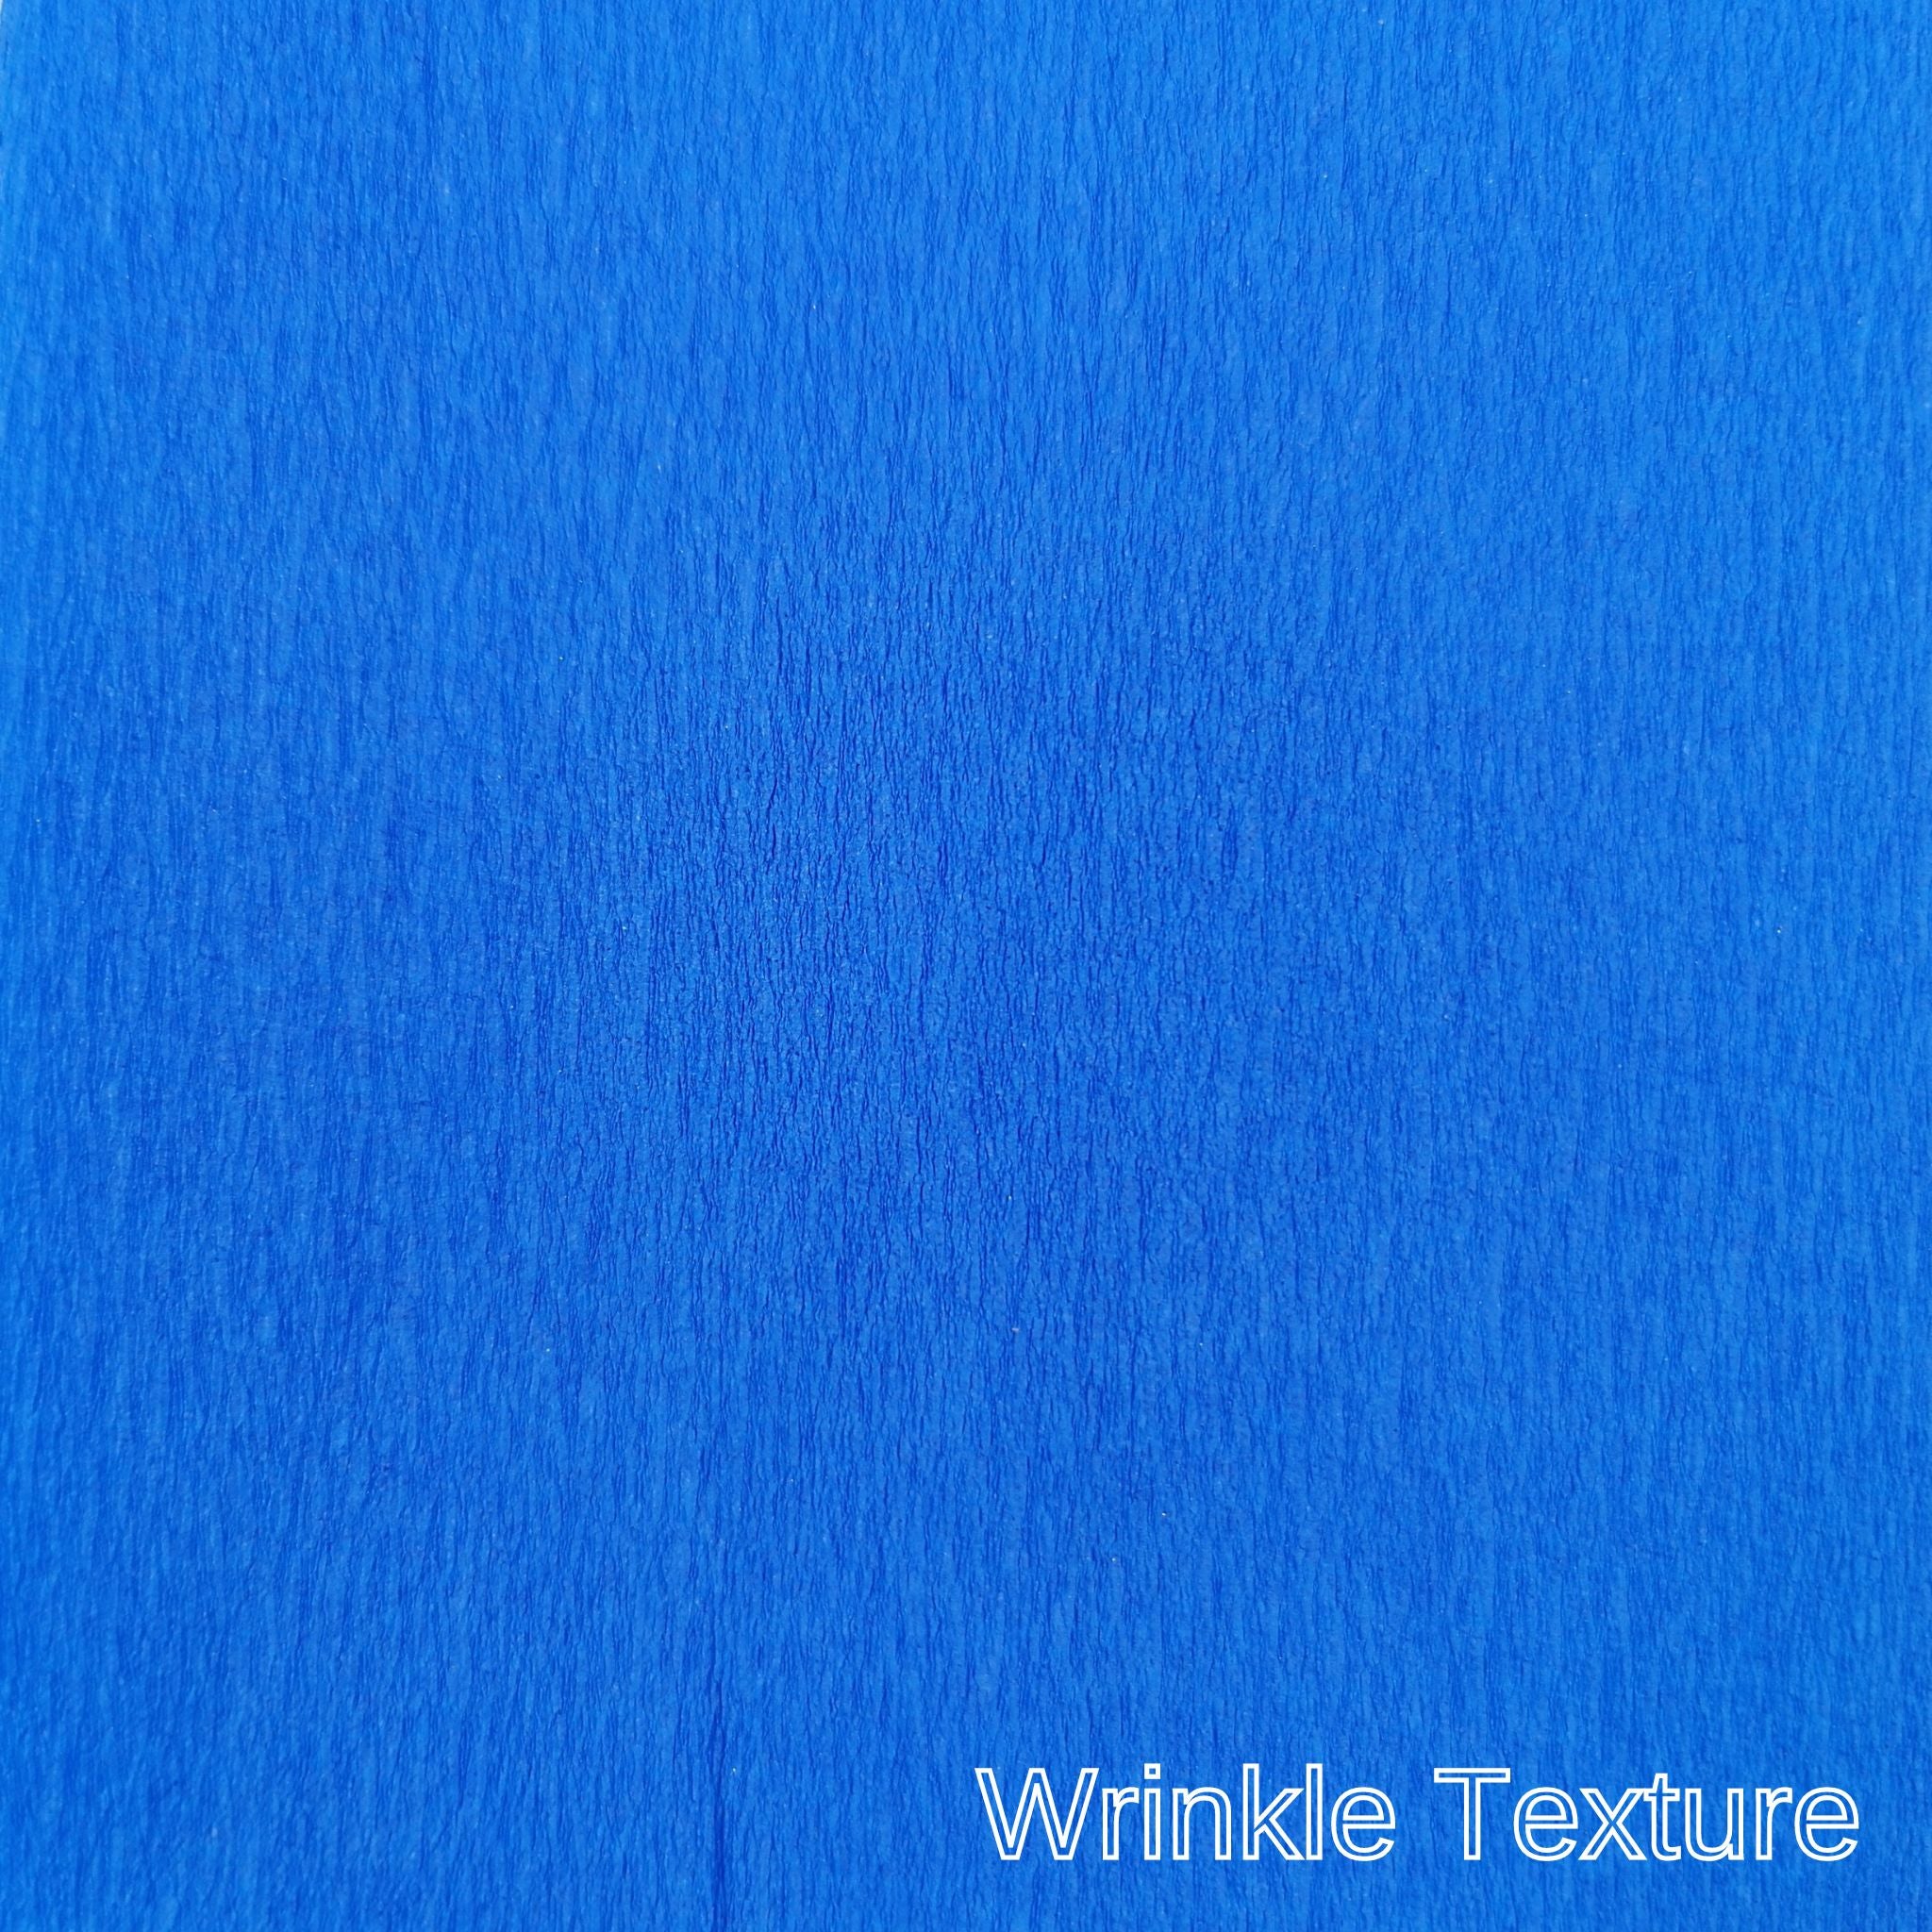 Sky Blue Tissue Paper - CarnivalPapers